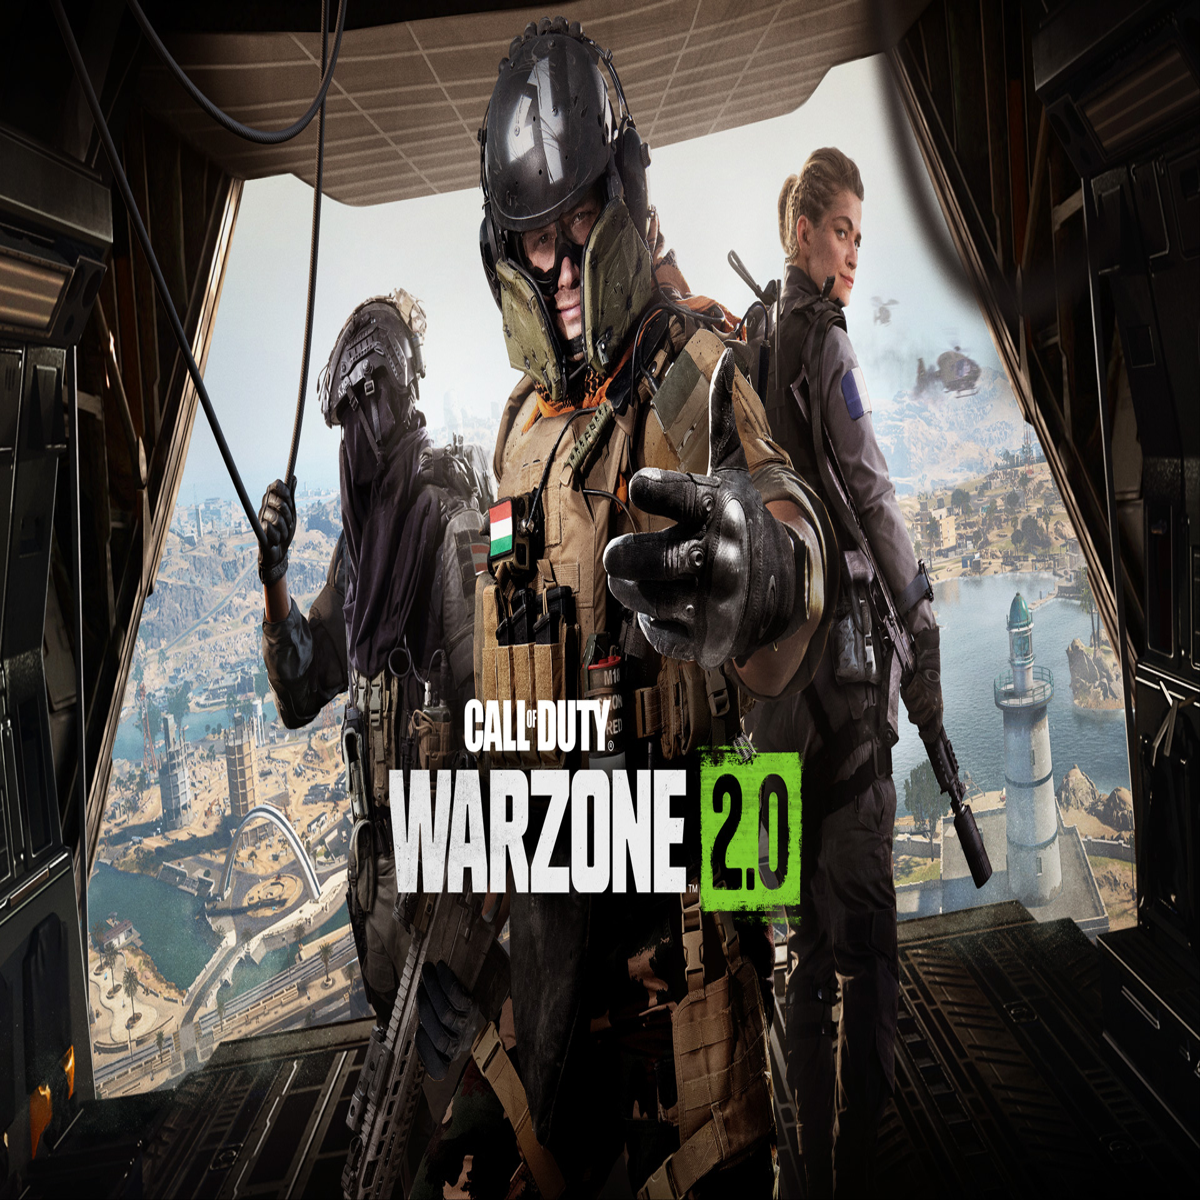 Jogo Grátis) Call of Duty: Warzone está de borla para PS4, Xbox e PC!